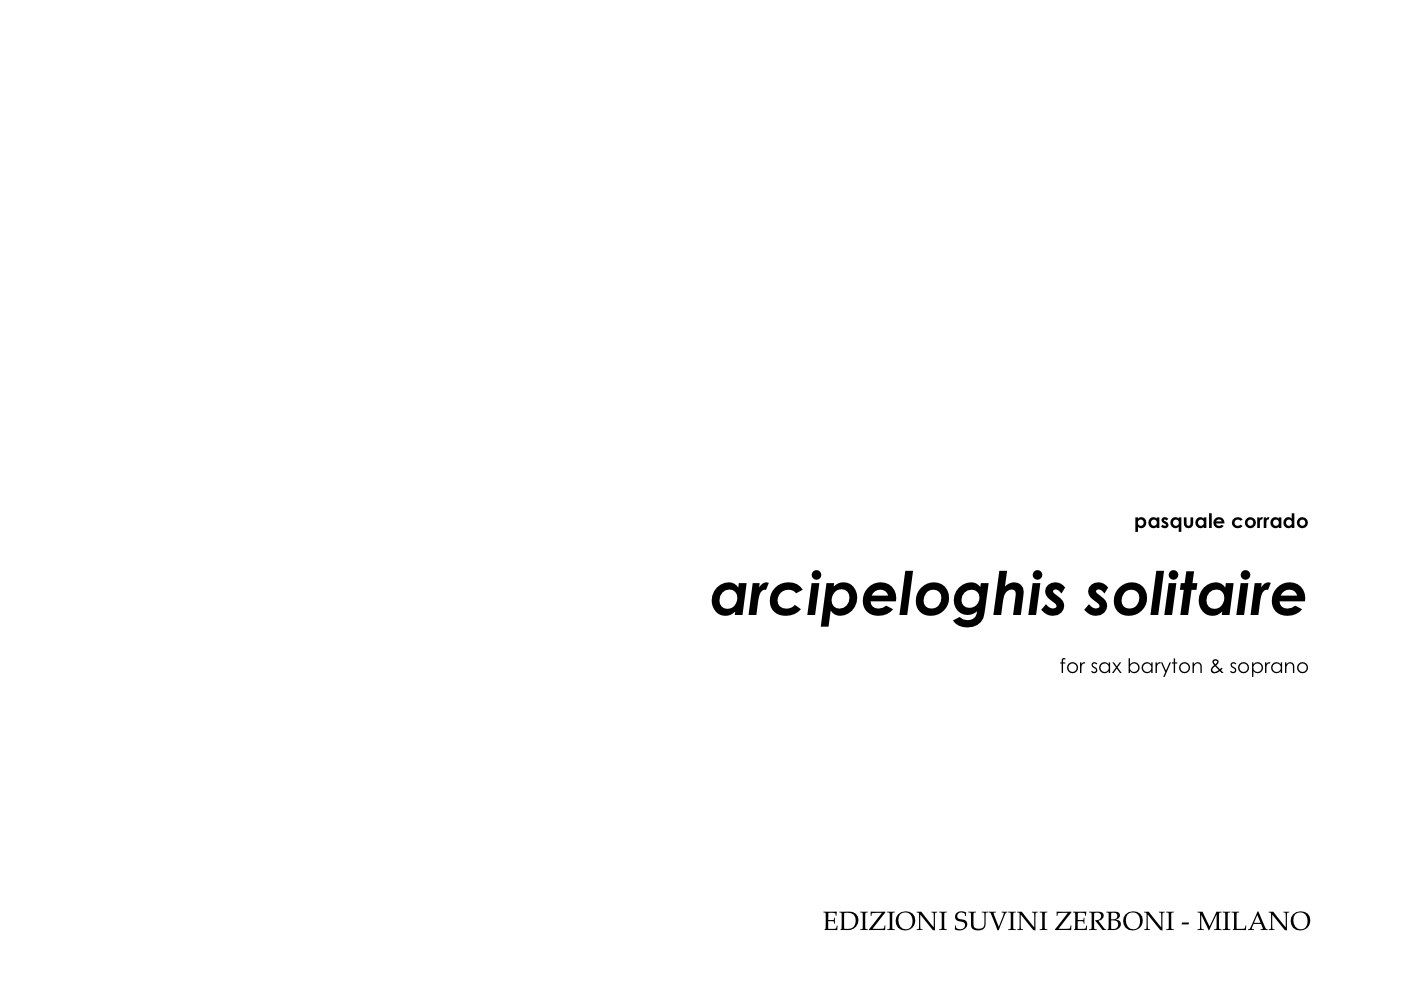 Arcipeloghis solitaire_Corrado 1